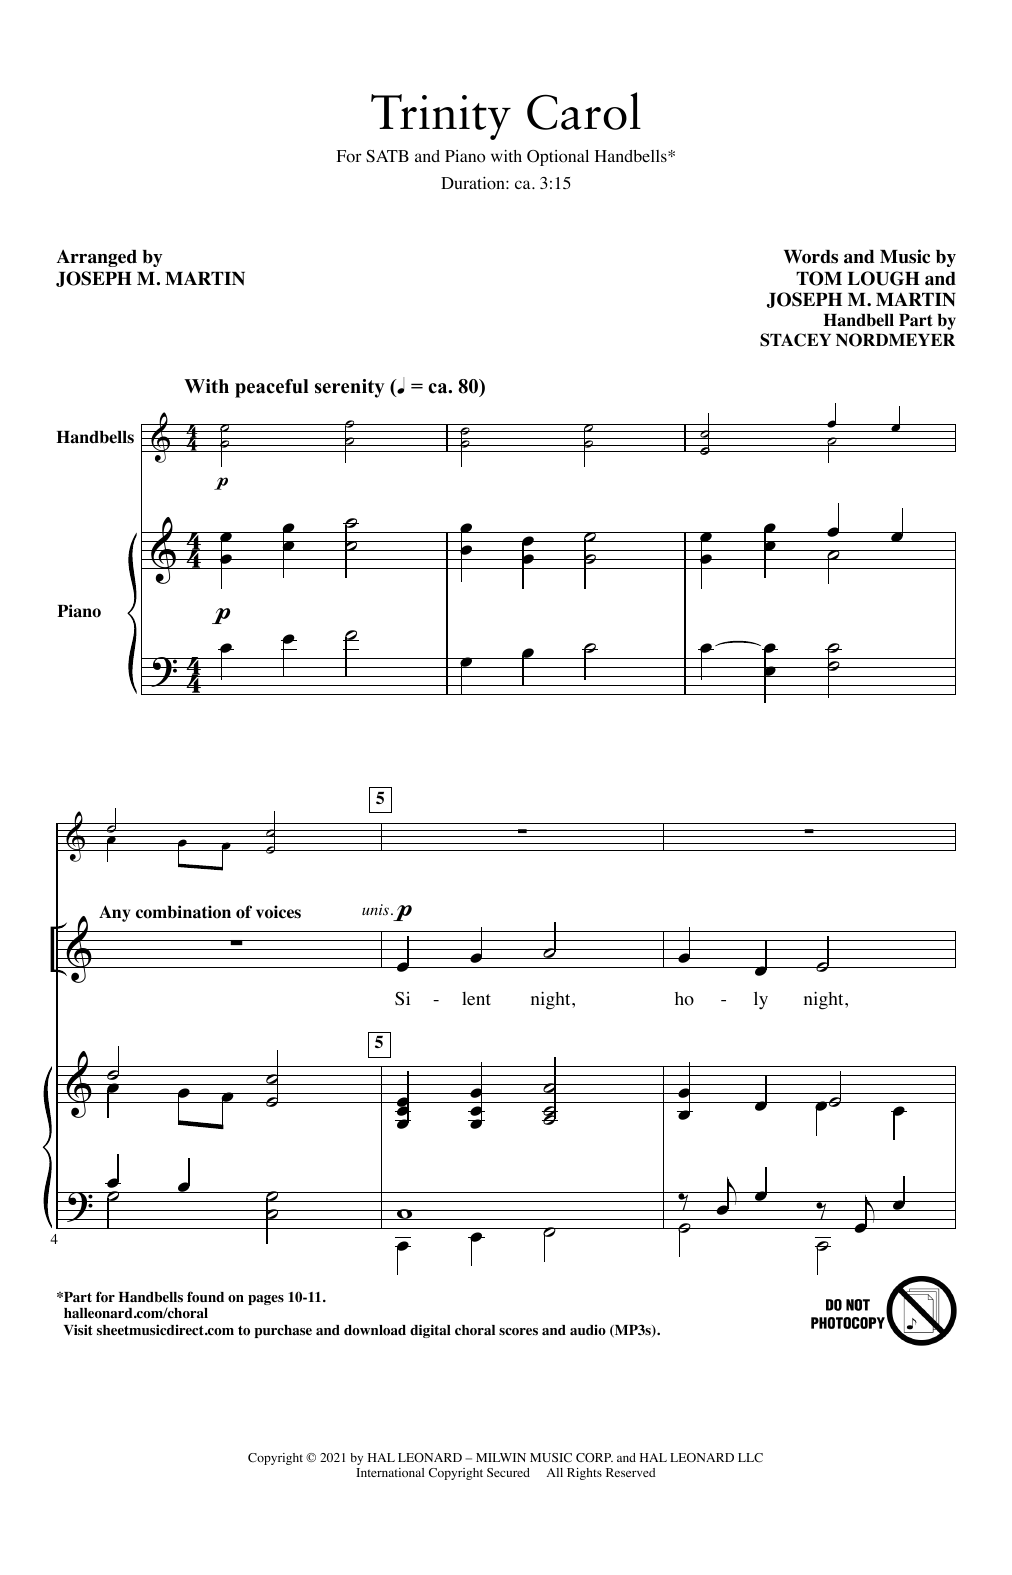 Tom Lough and Joseph M. Martin Trinity Carol (arr. Joseph M. Martin) sheet music notes and chords arranged for SATB Choir